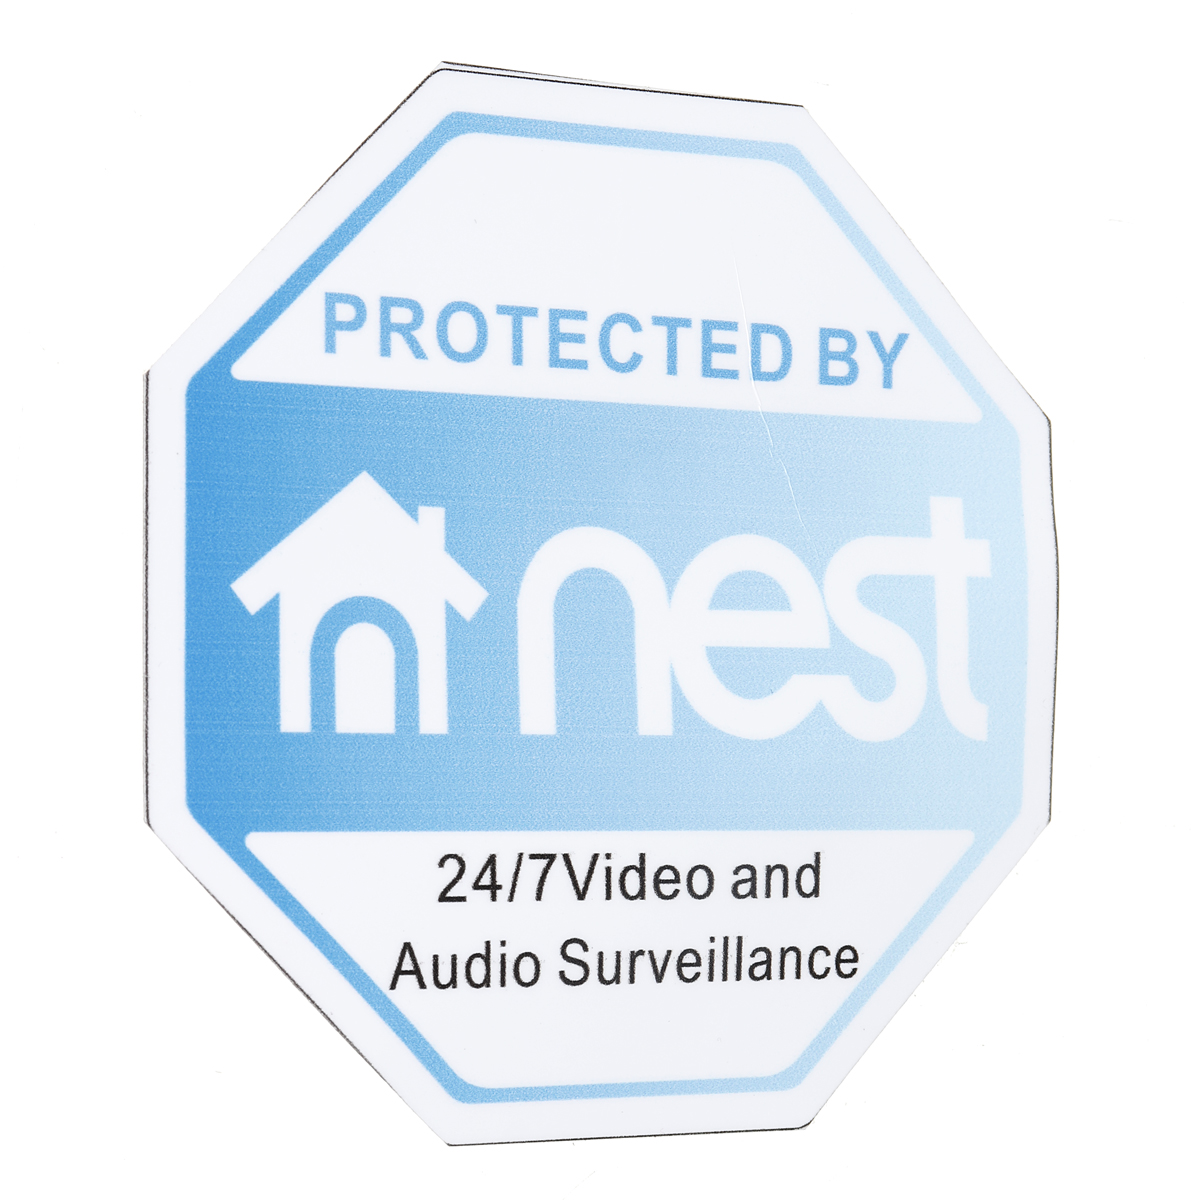 4quotx4quot-Video-Doorbell-Sticker-Decal-Nest-Video-Security-Camera-Yard-Sign-Outdoor-1744462-7